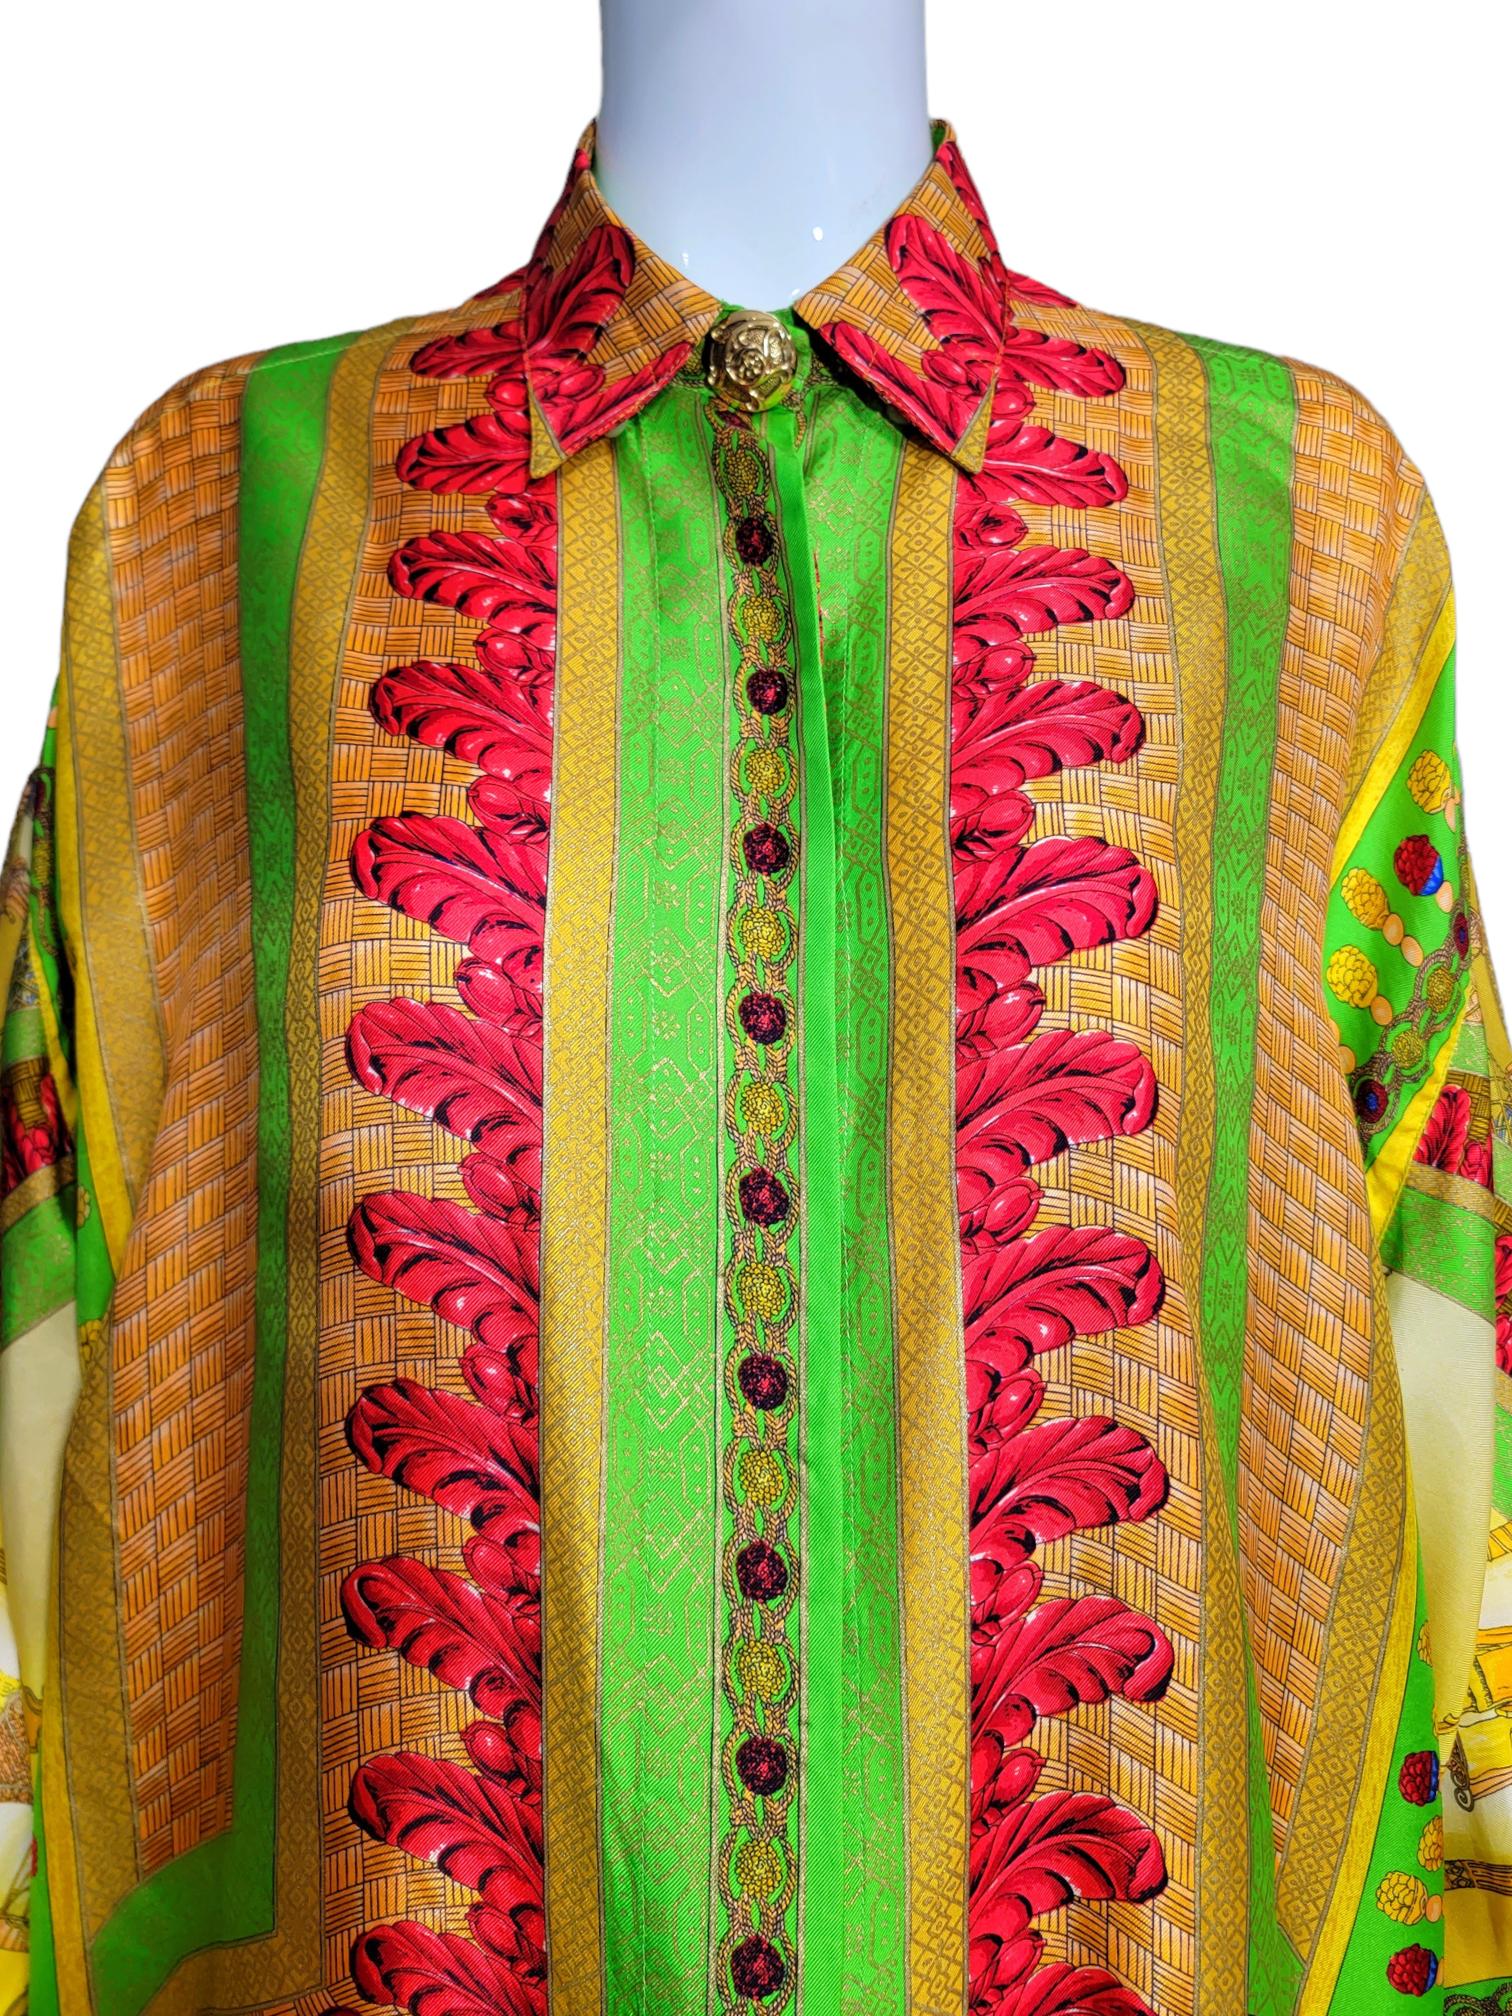 Yellow Gianni Versace Marco Polo Silk Shirt Chinese Emperor Peacocks 1992 